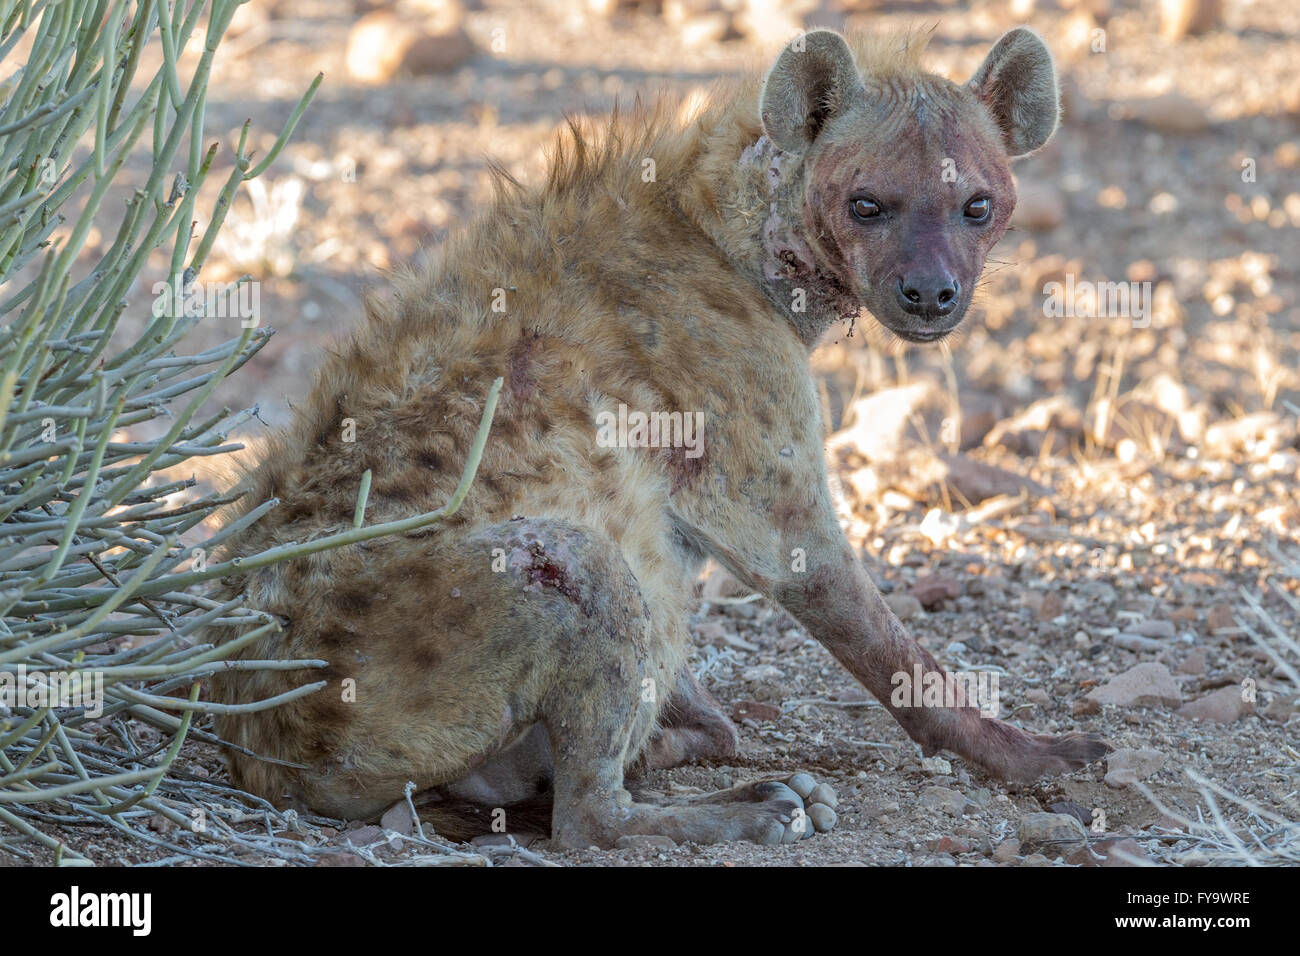 Bloodied Spotted Hyena aka laughing hyena, post fight by Euphorbia Damaraland, Namibia Stock Photo